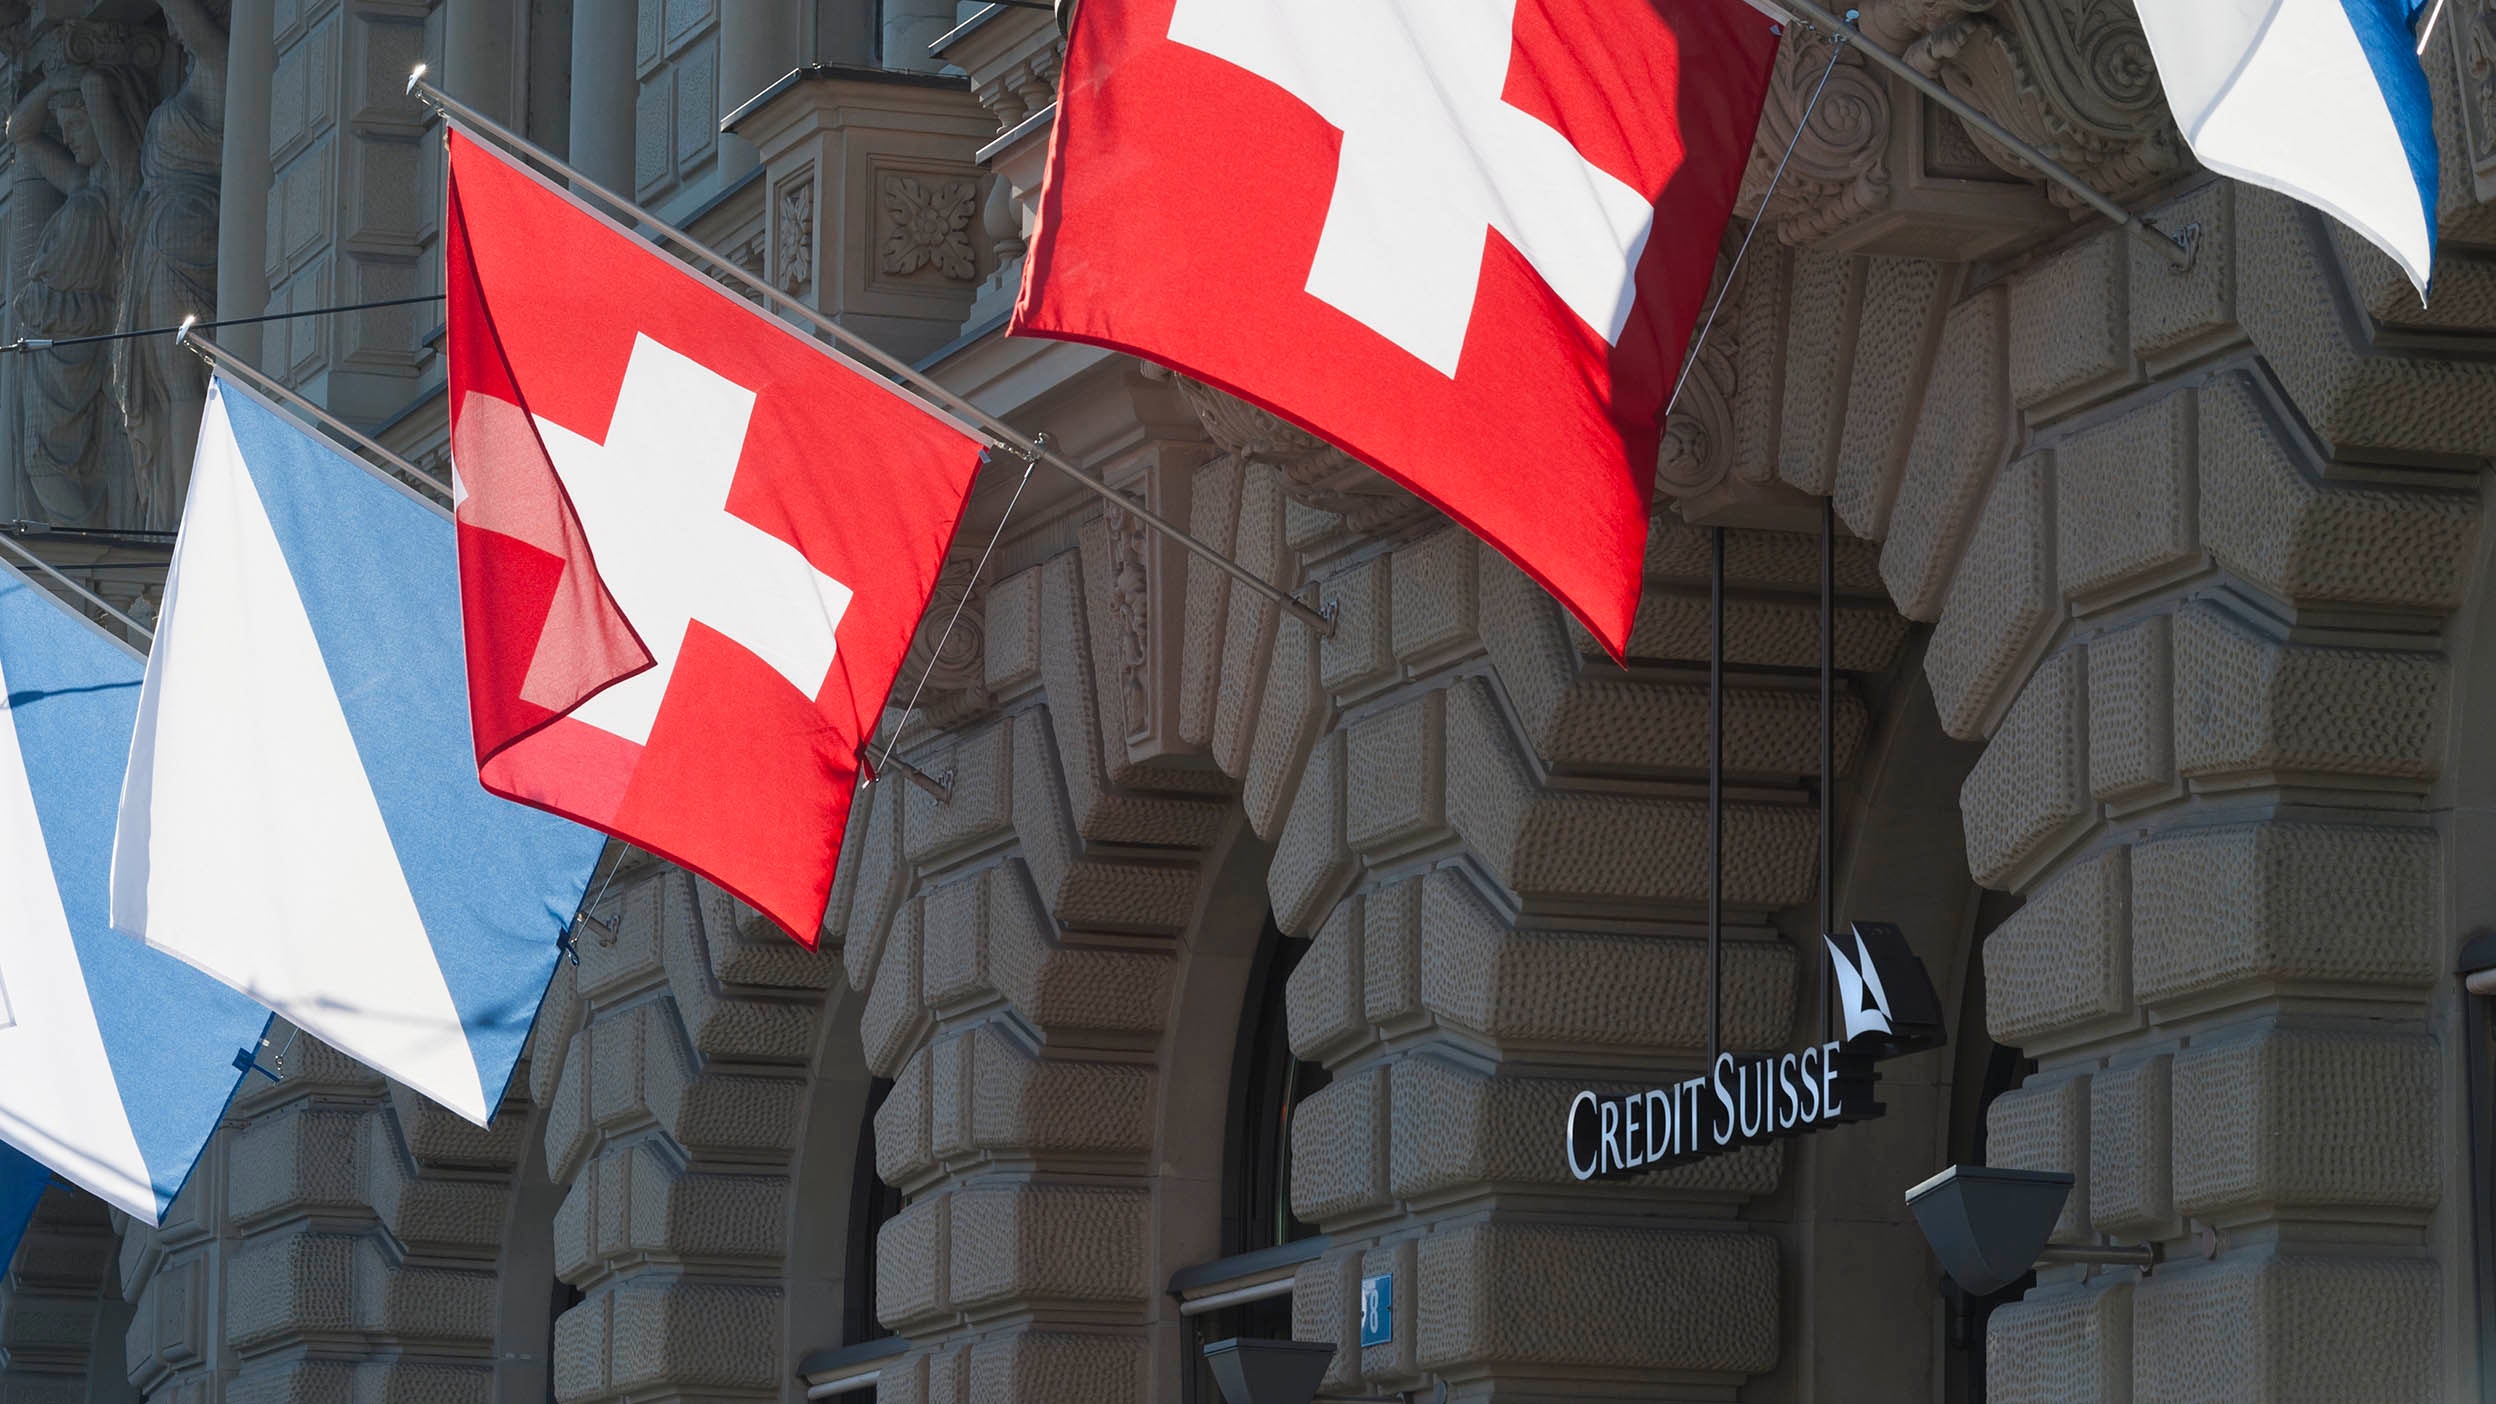 Credit Suisse building